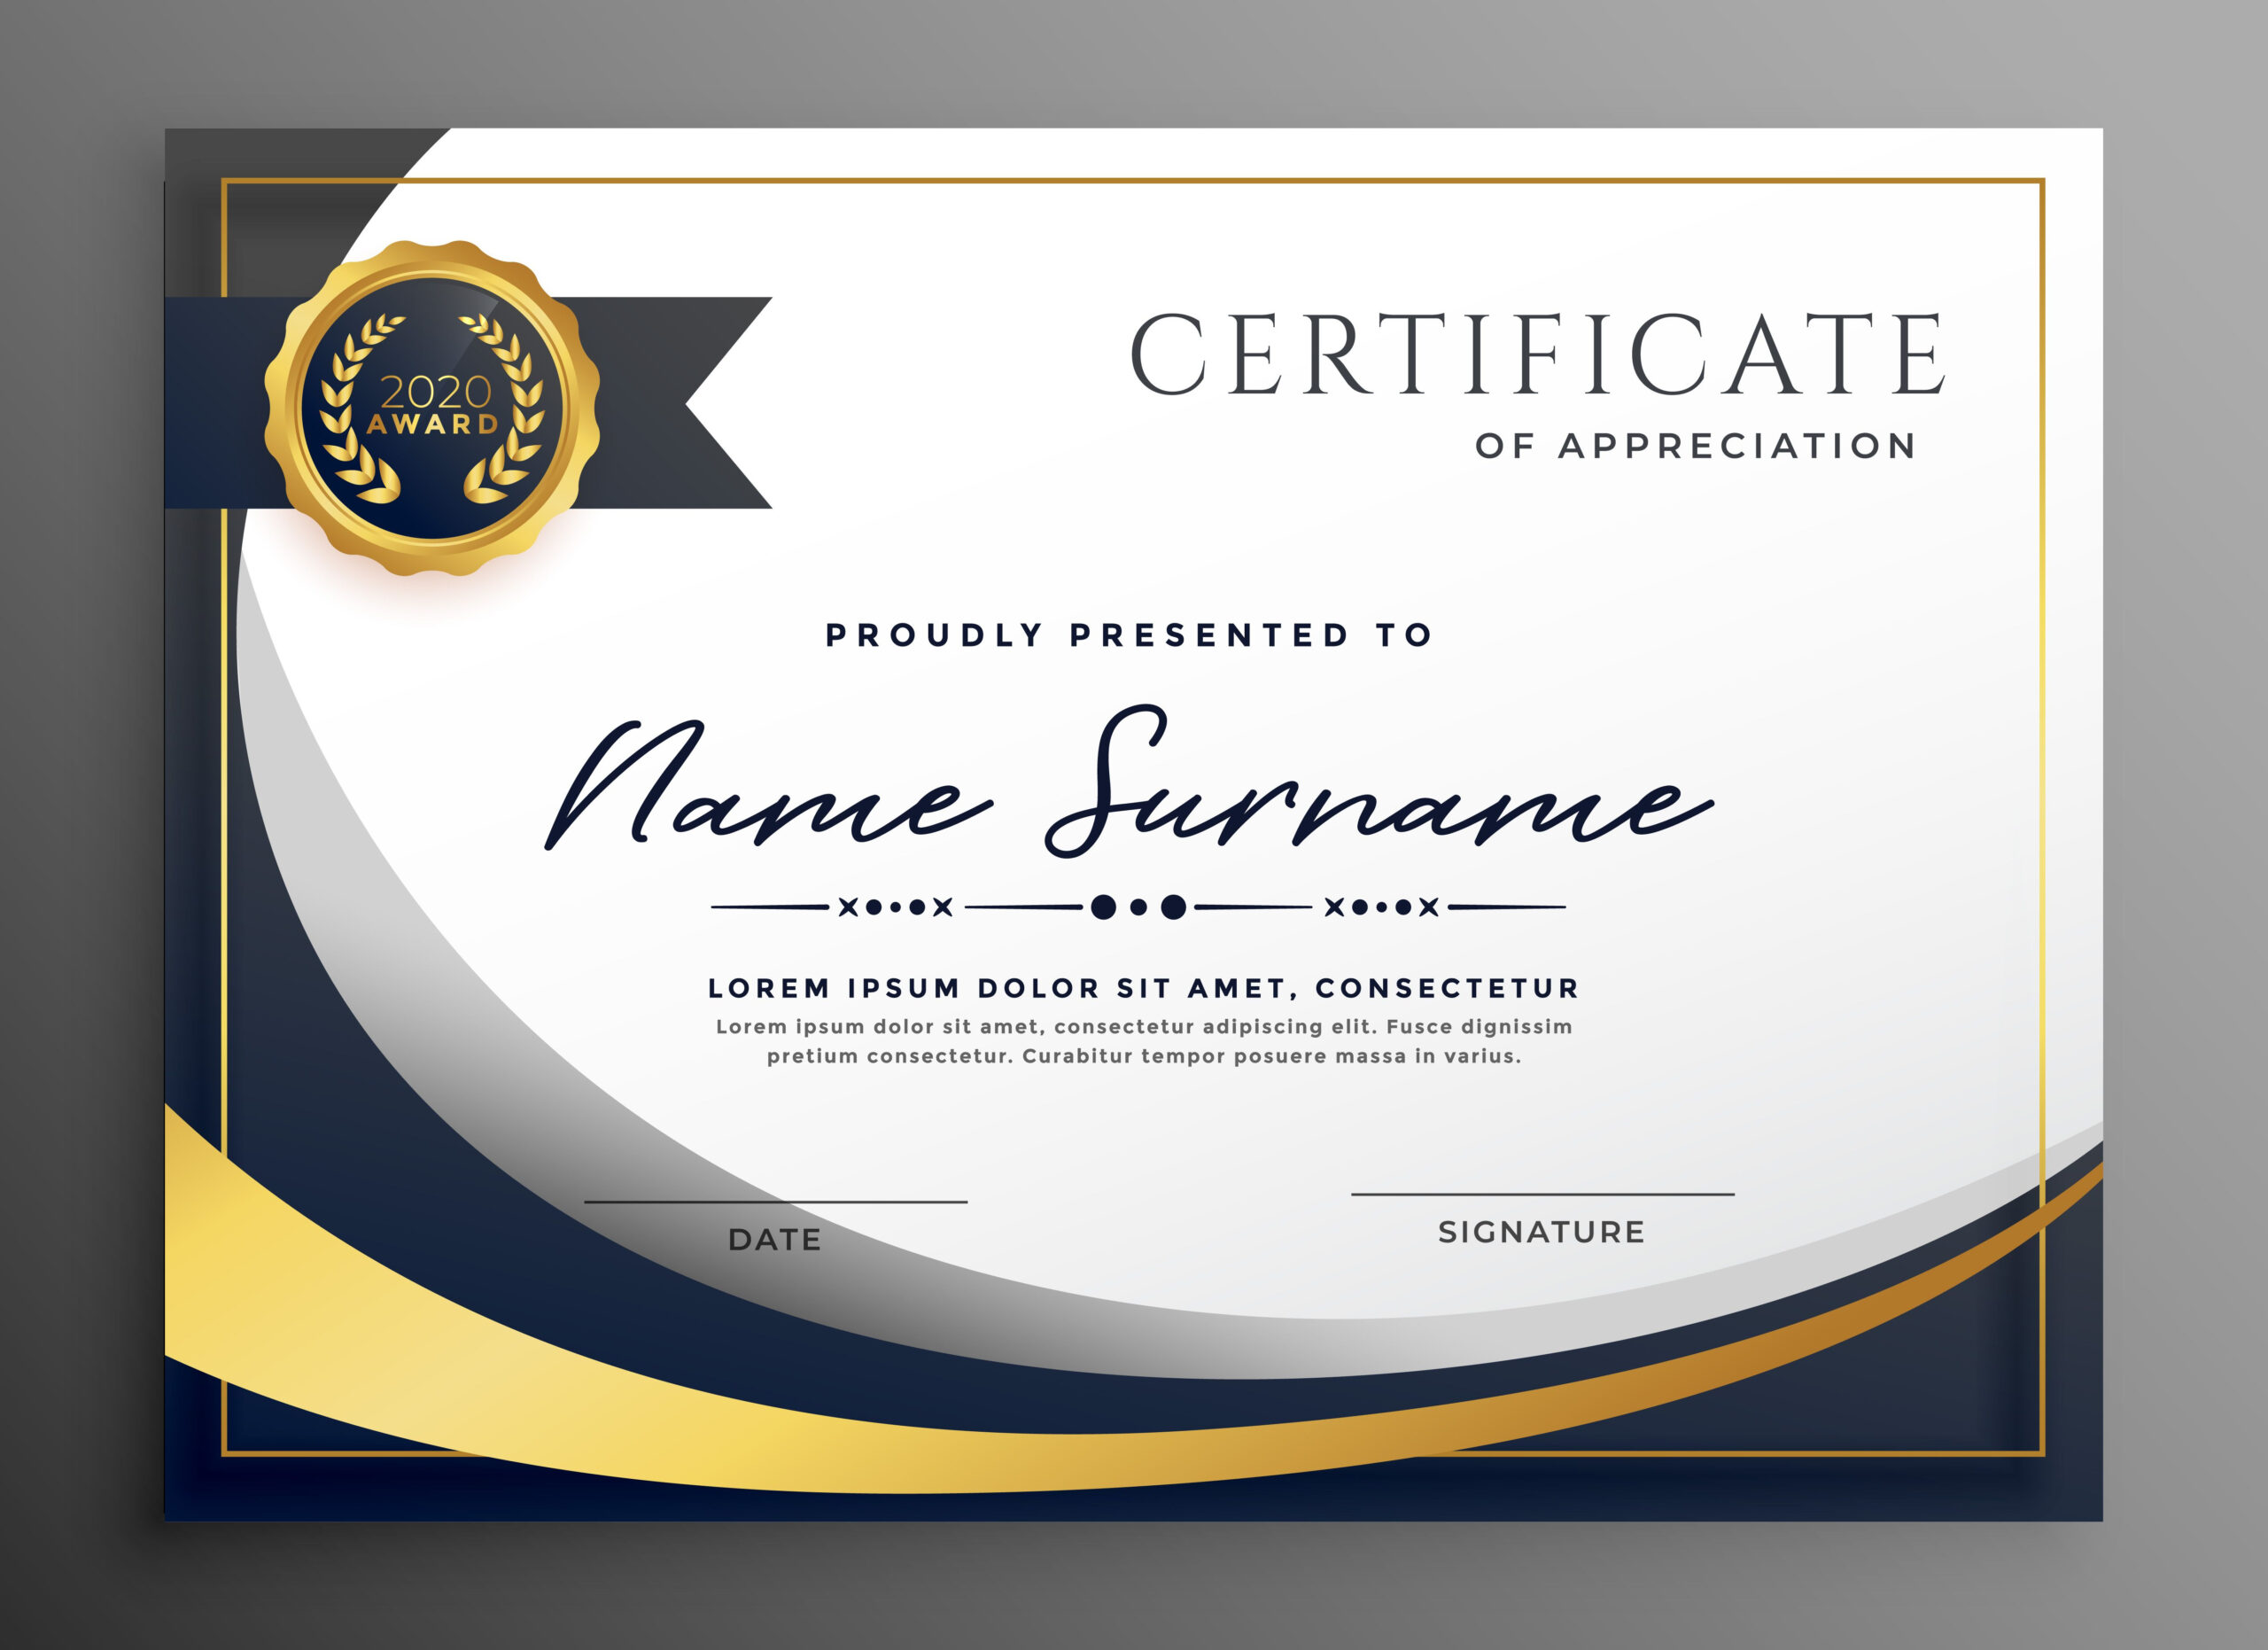 Premium Wavy Certificate Template Design | Certificate Inside Award Certificate Design Template